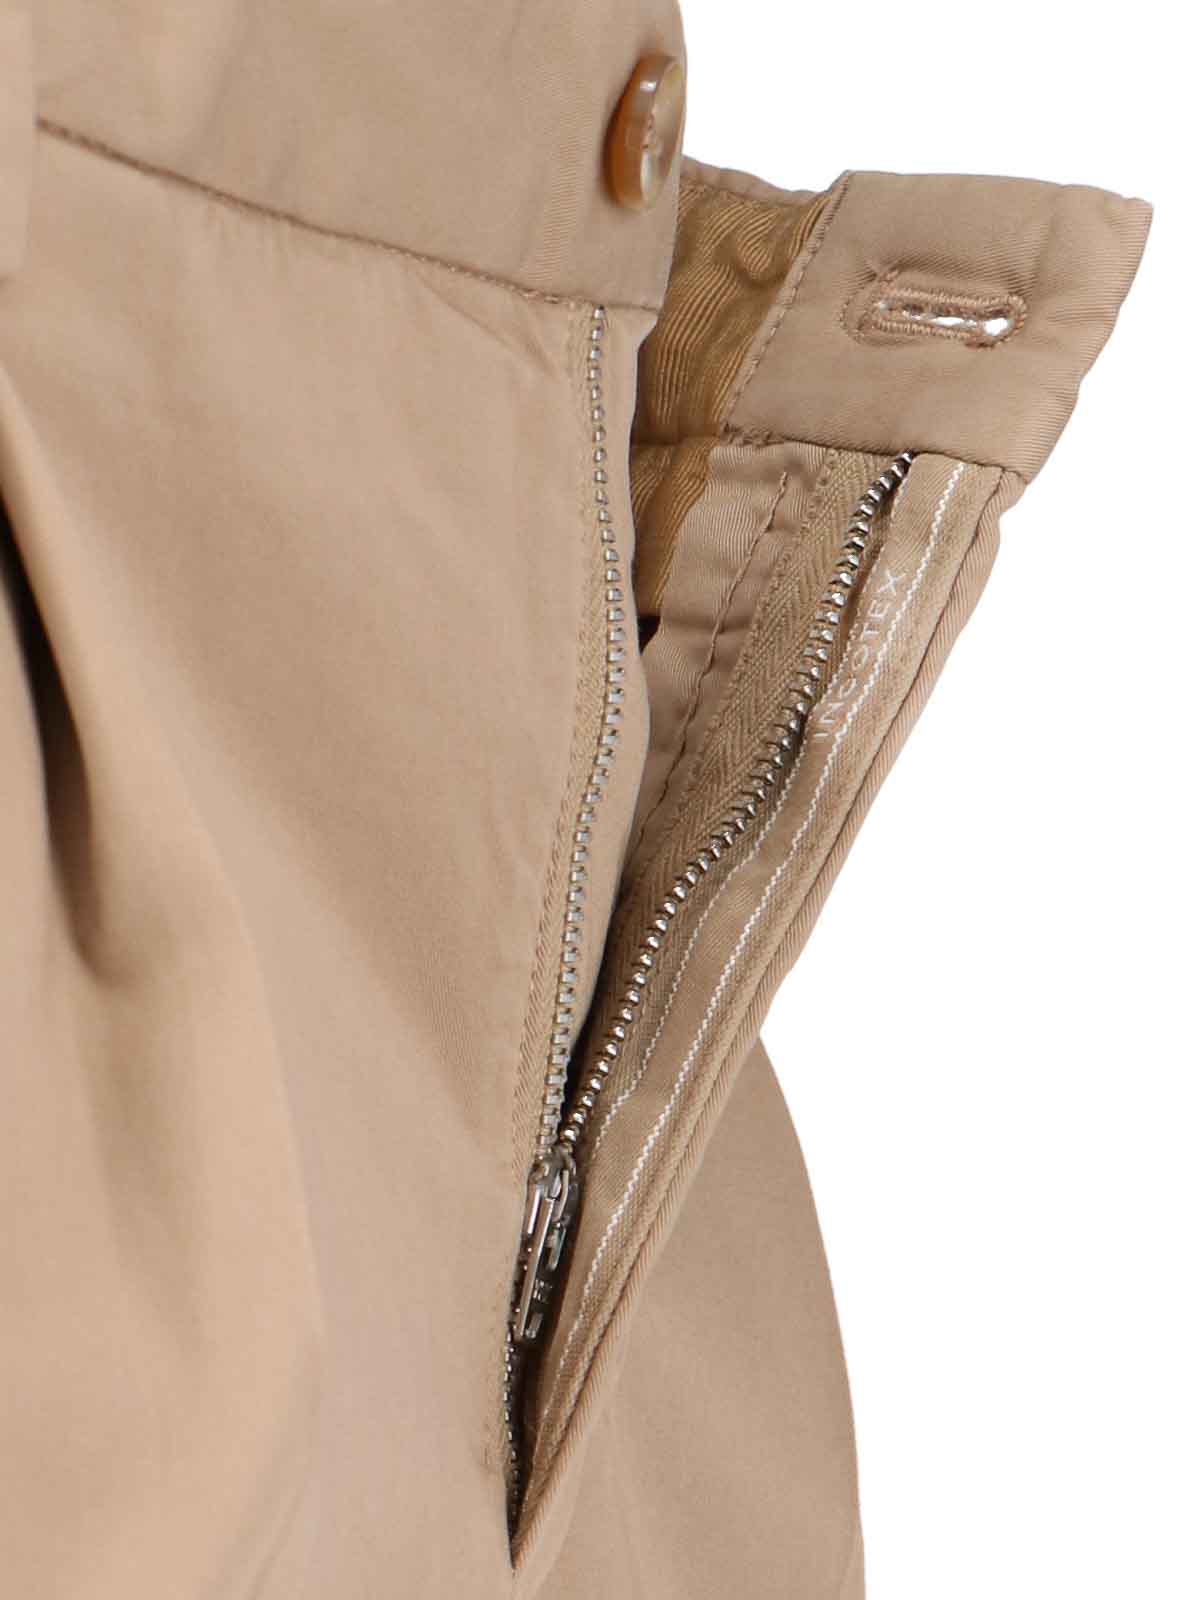 Shop Incotex Pantaloni Slim In Brown